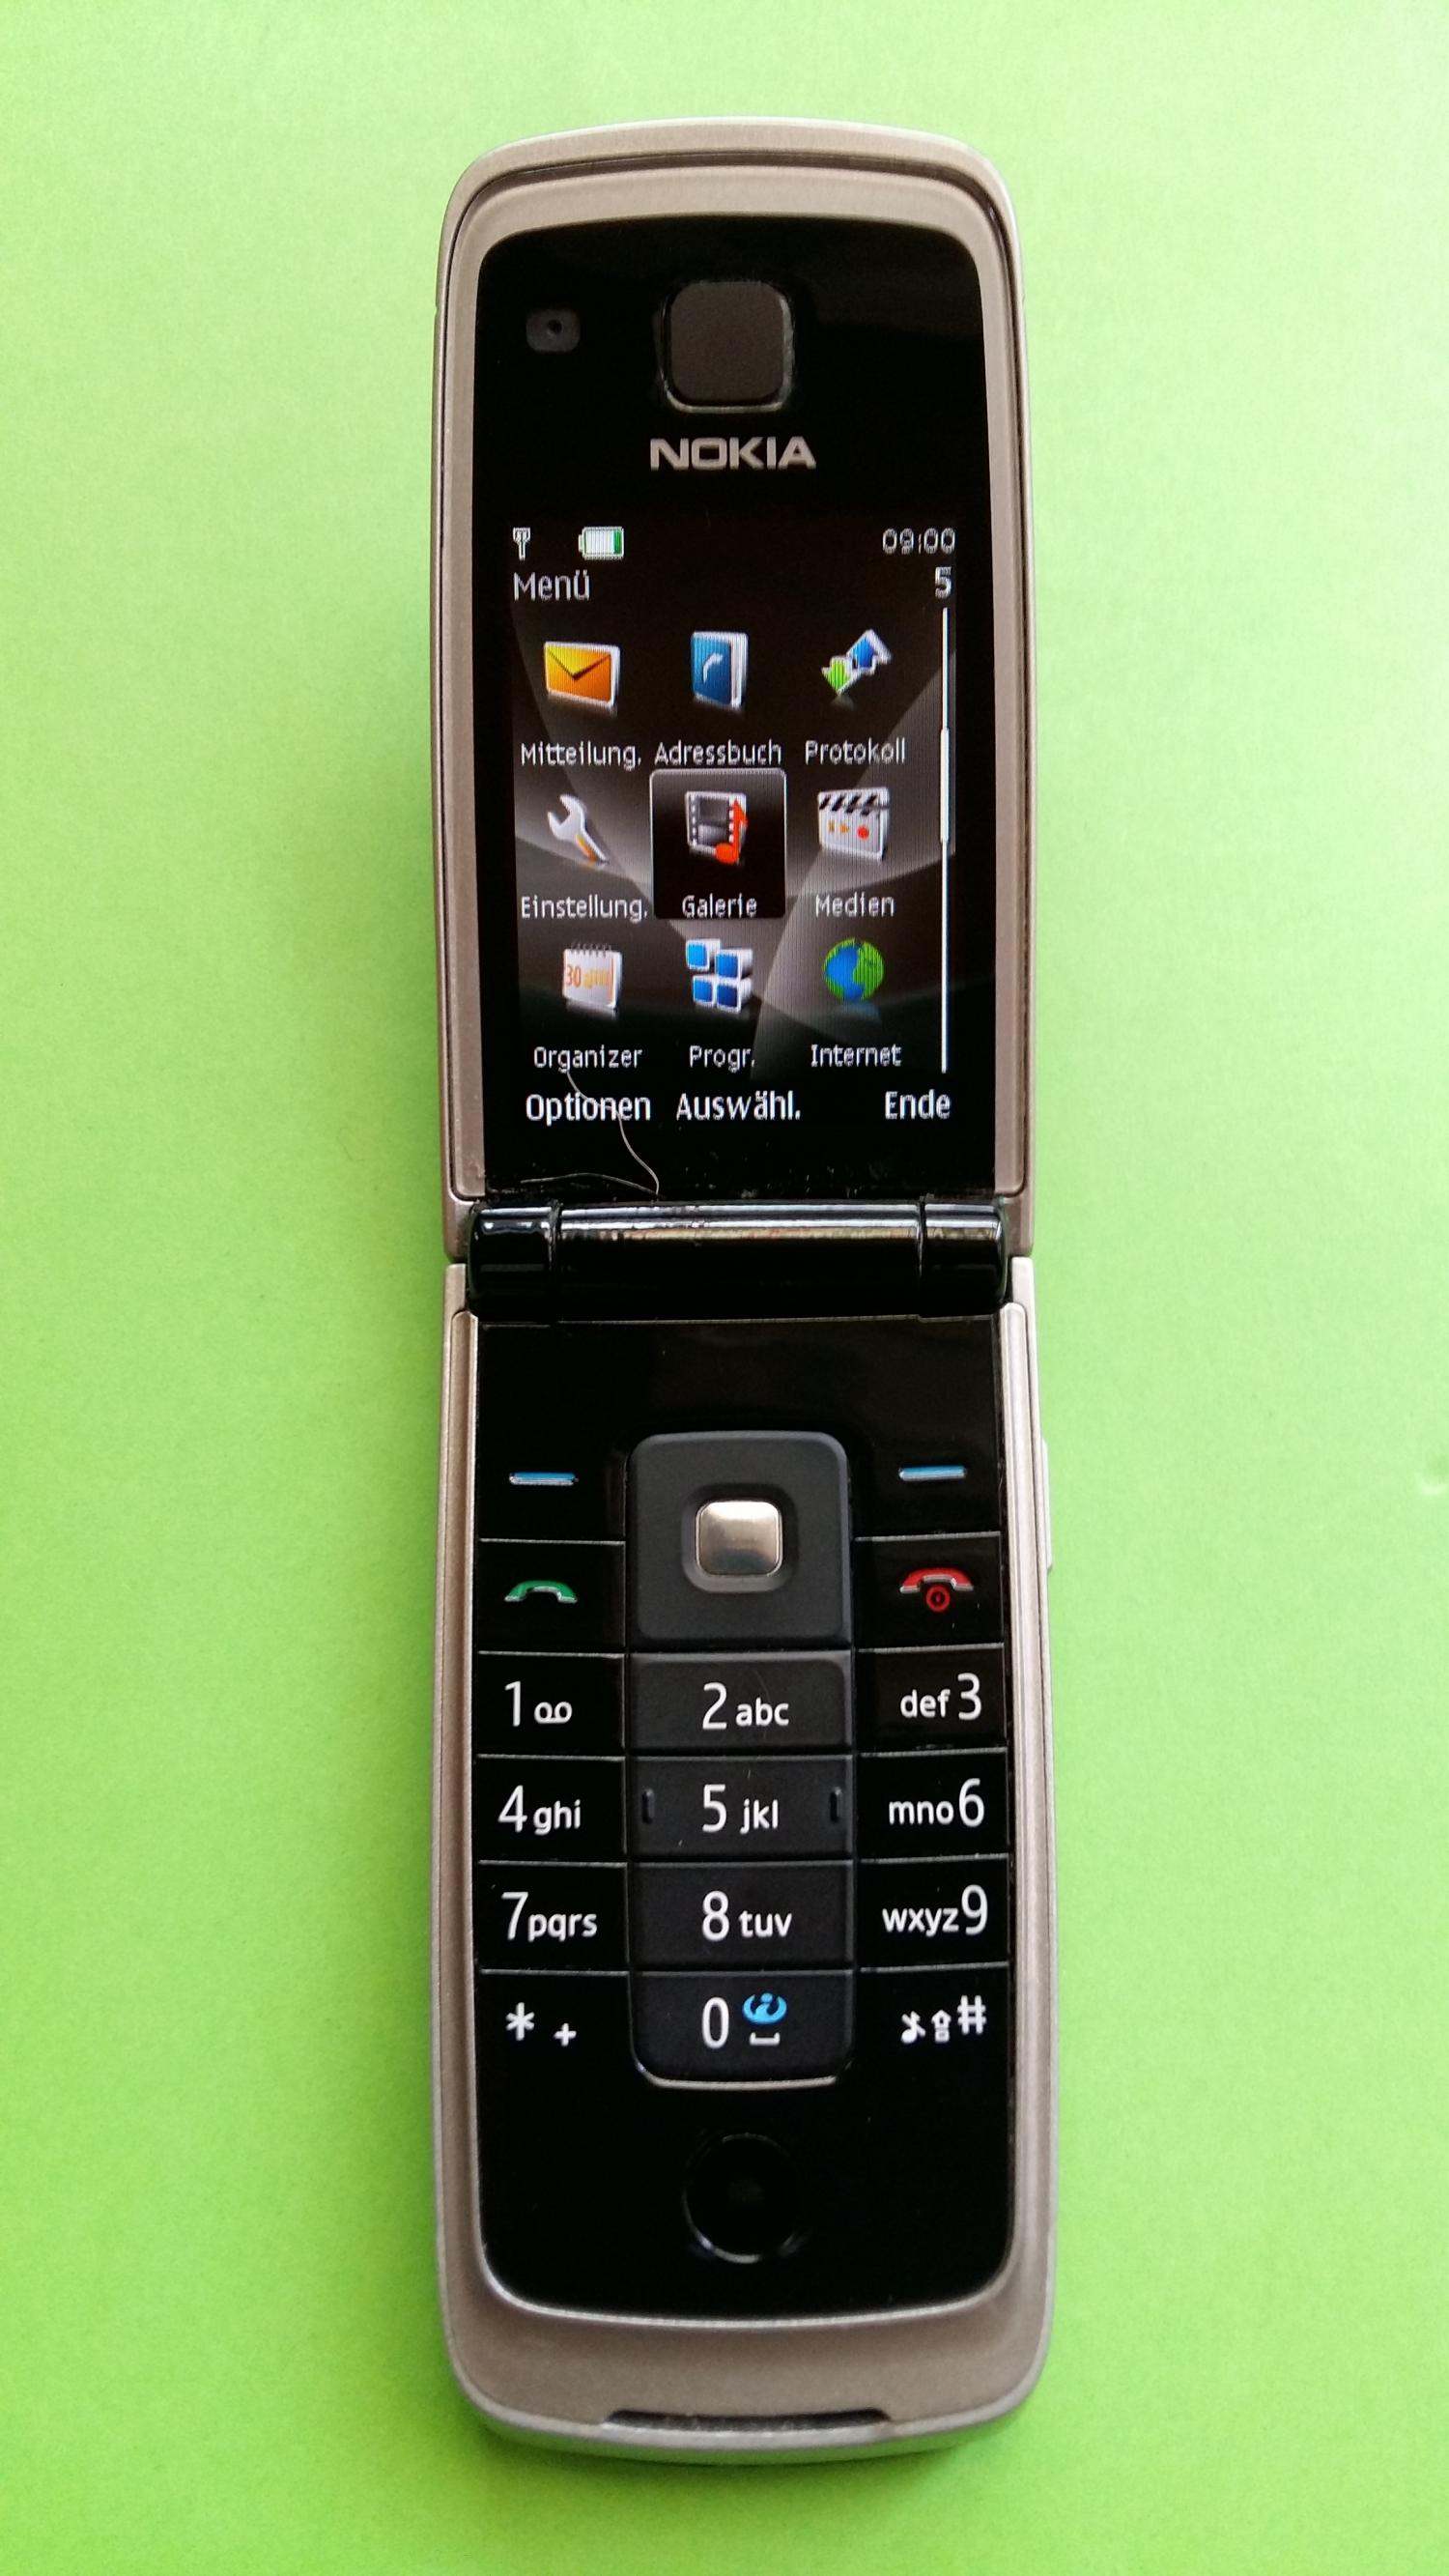 image-7331848-Nokia 6600F-1 Fold (2)2.jpg